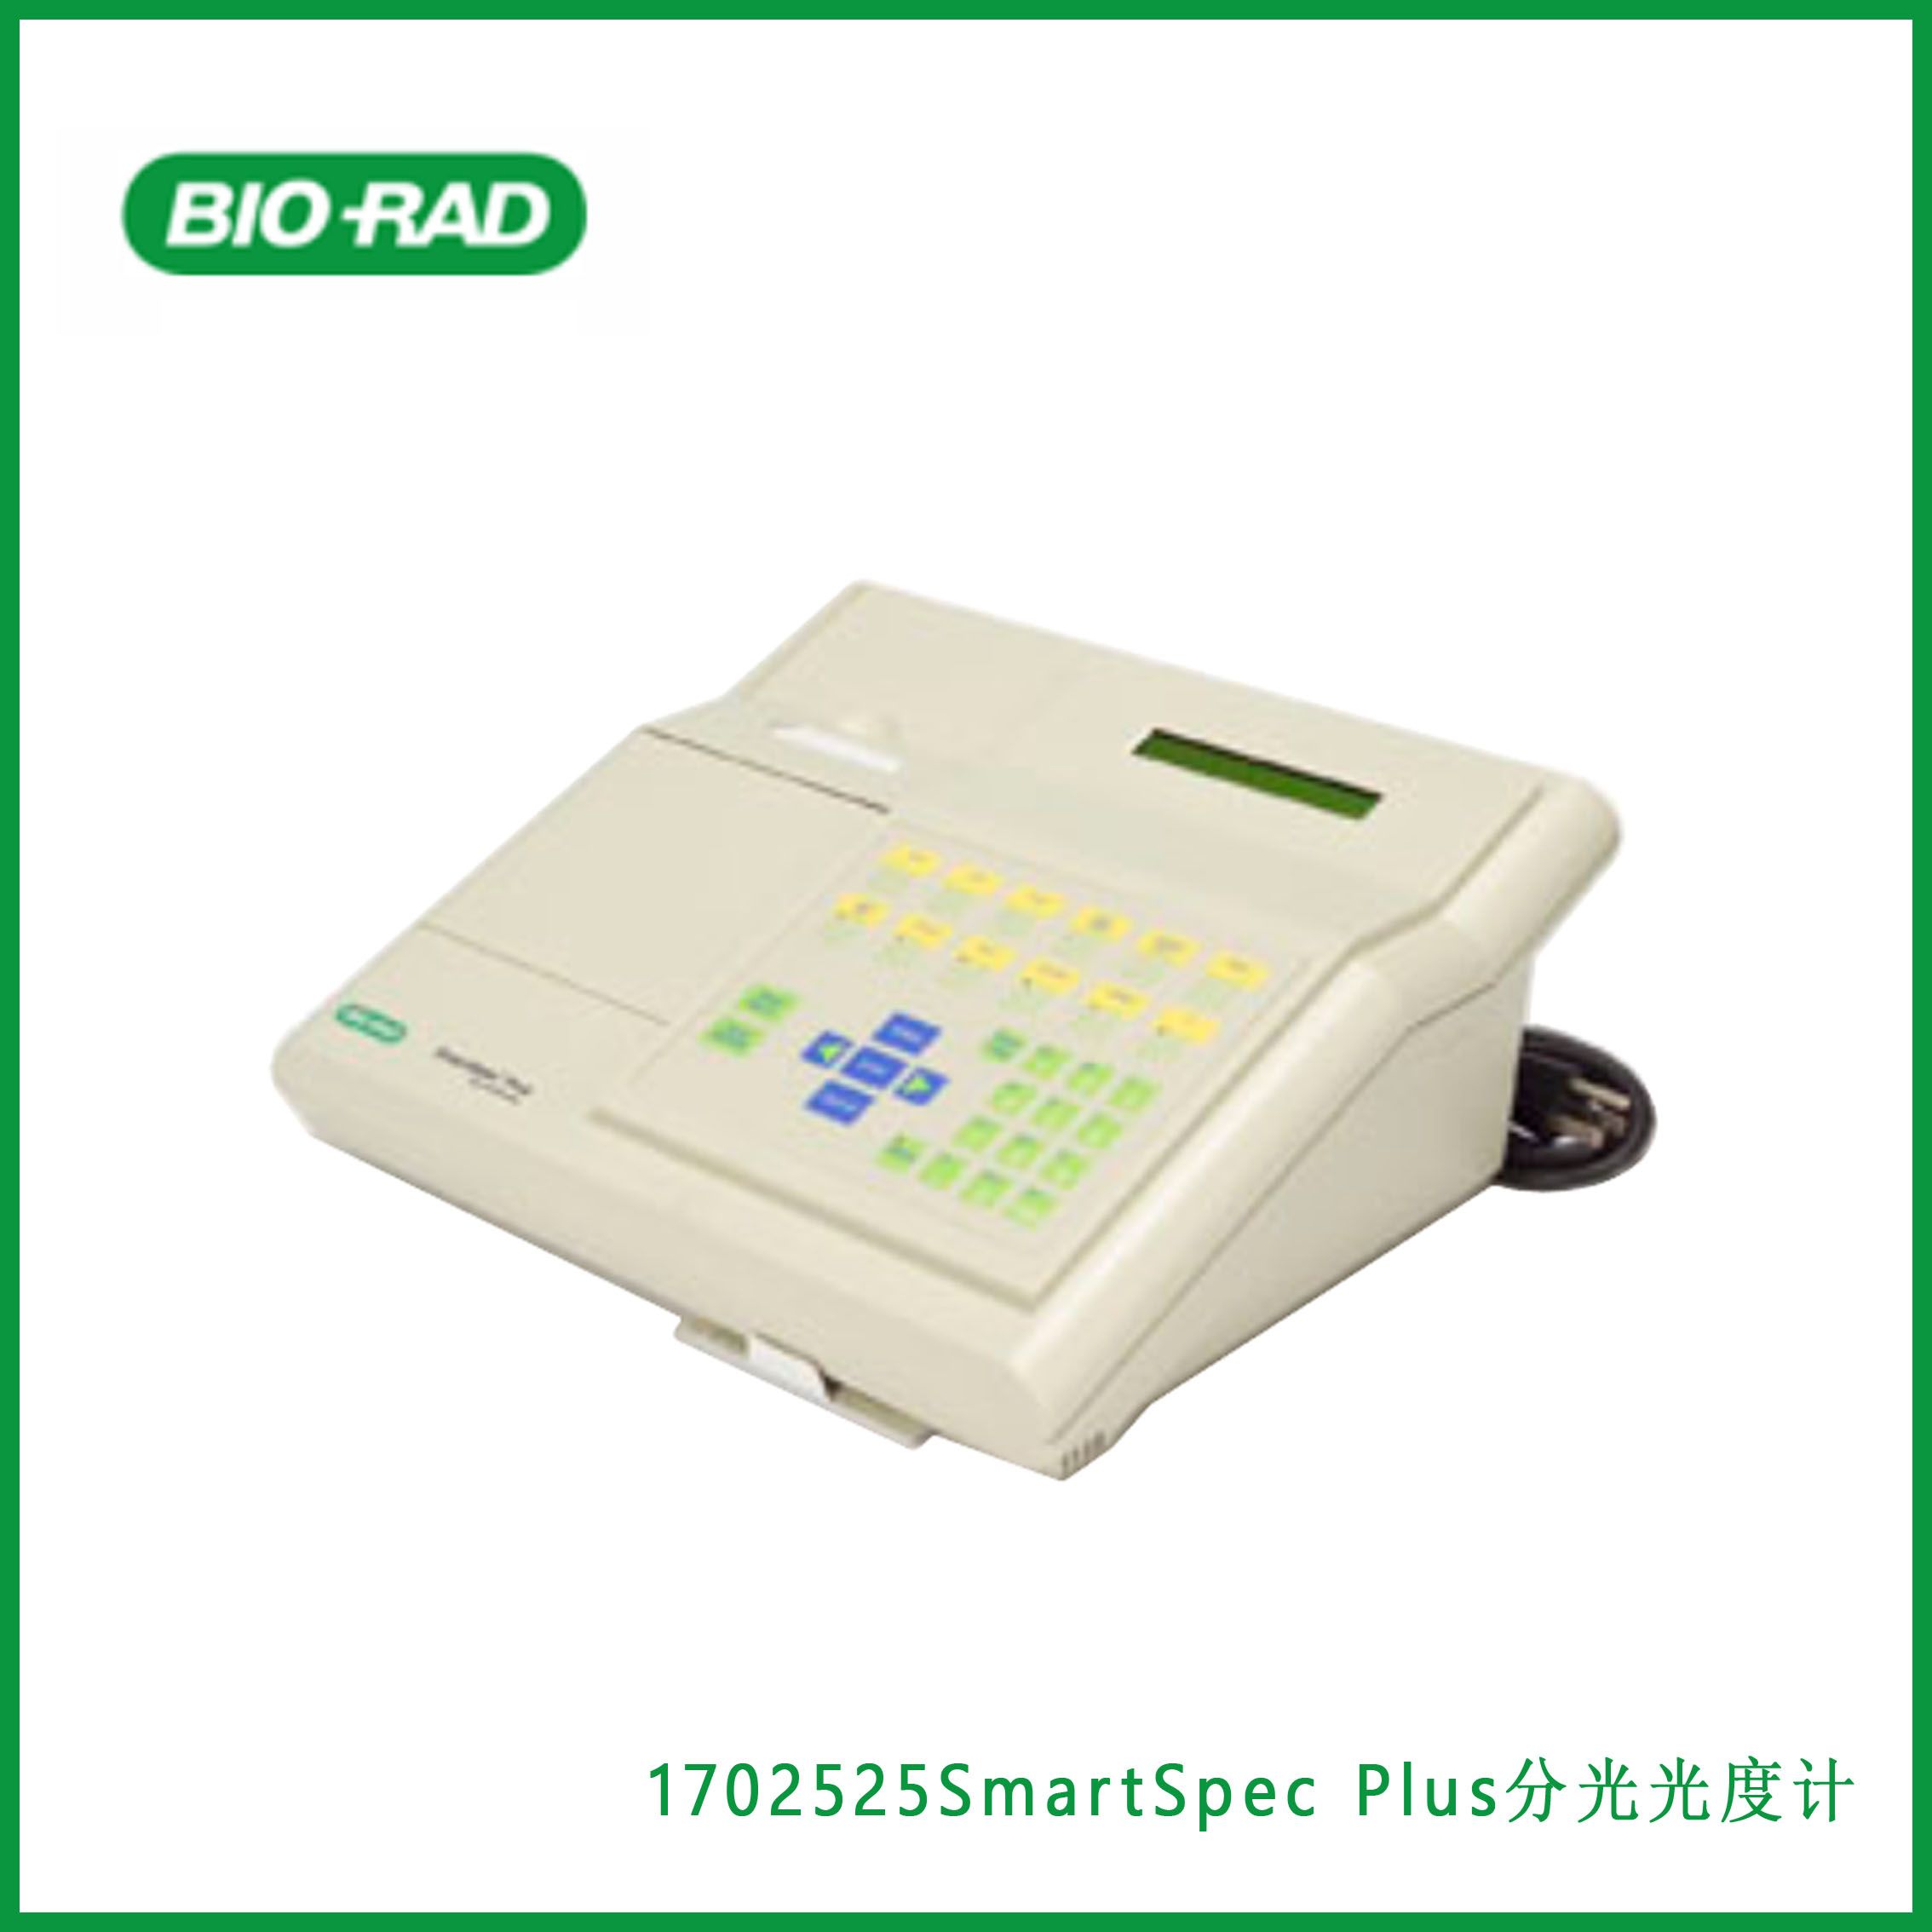 伯乐Bio-rad 1702525 SmartSpec Plus Spectrophotometer，SmartSpec Plus分光光度计,现货